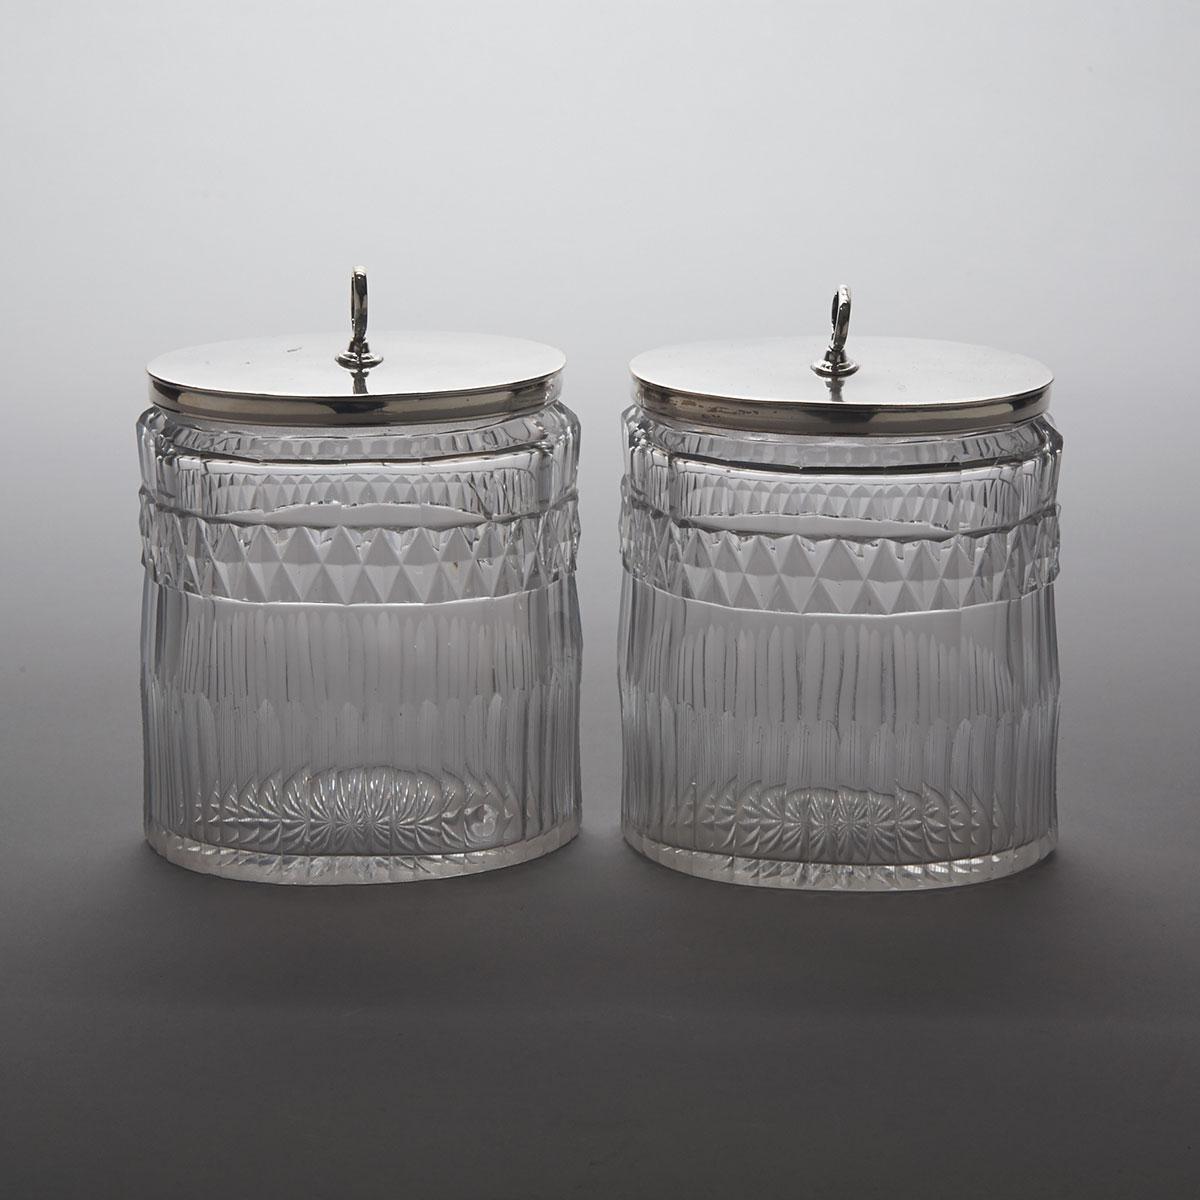 Pair of Anglo-Irish Cut Glass Oval Tea Caddies, c.1800